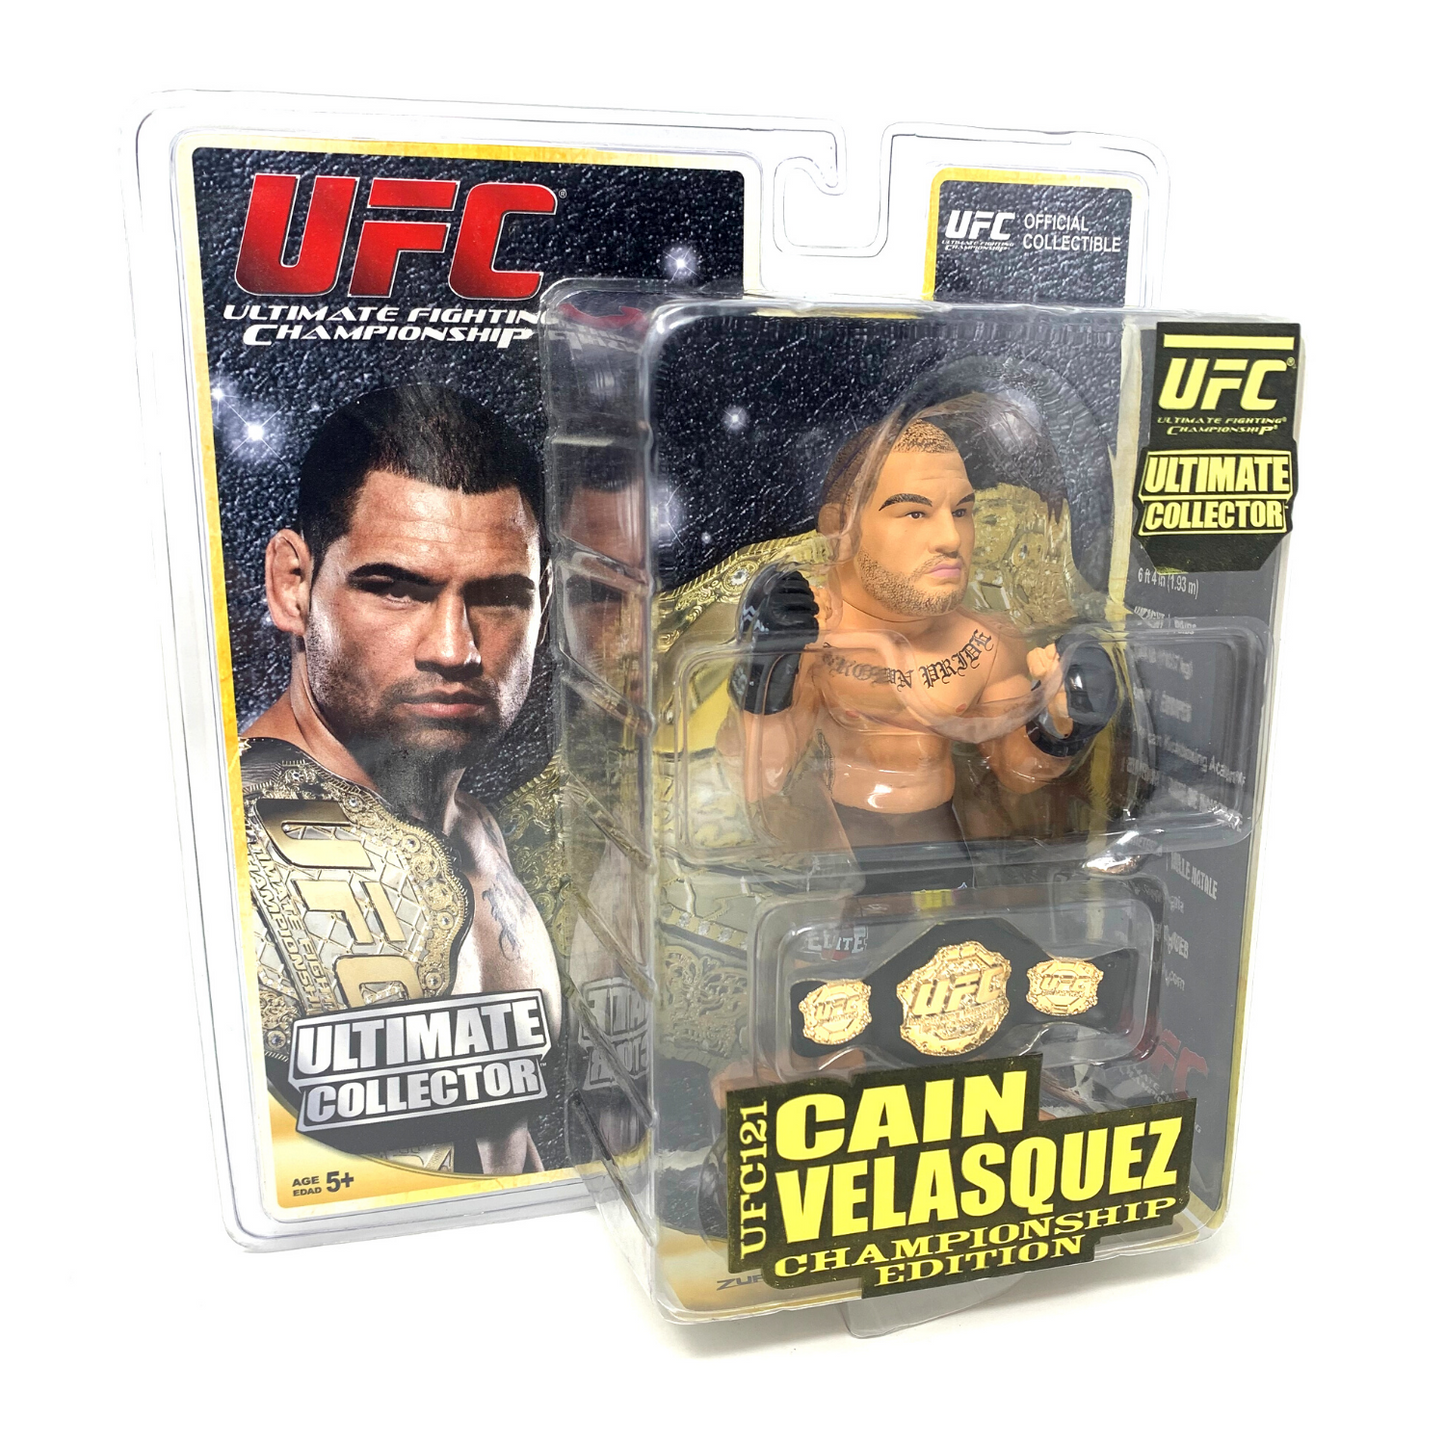 Round 5 UFC Cain Velasquez Ultimate Collector UFC 121 Championship Action Figure